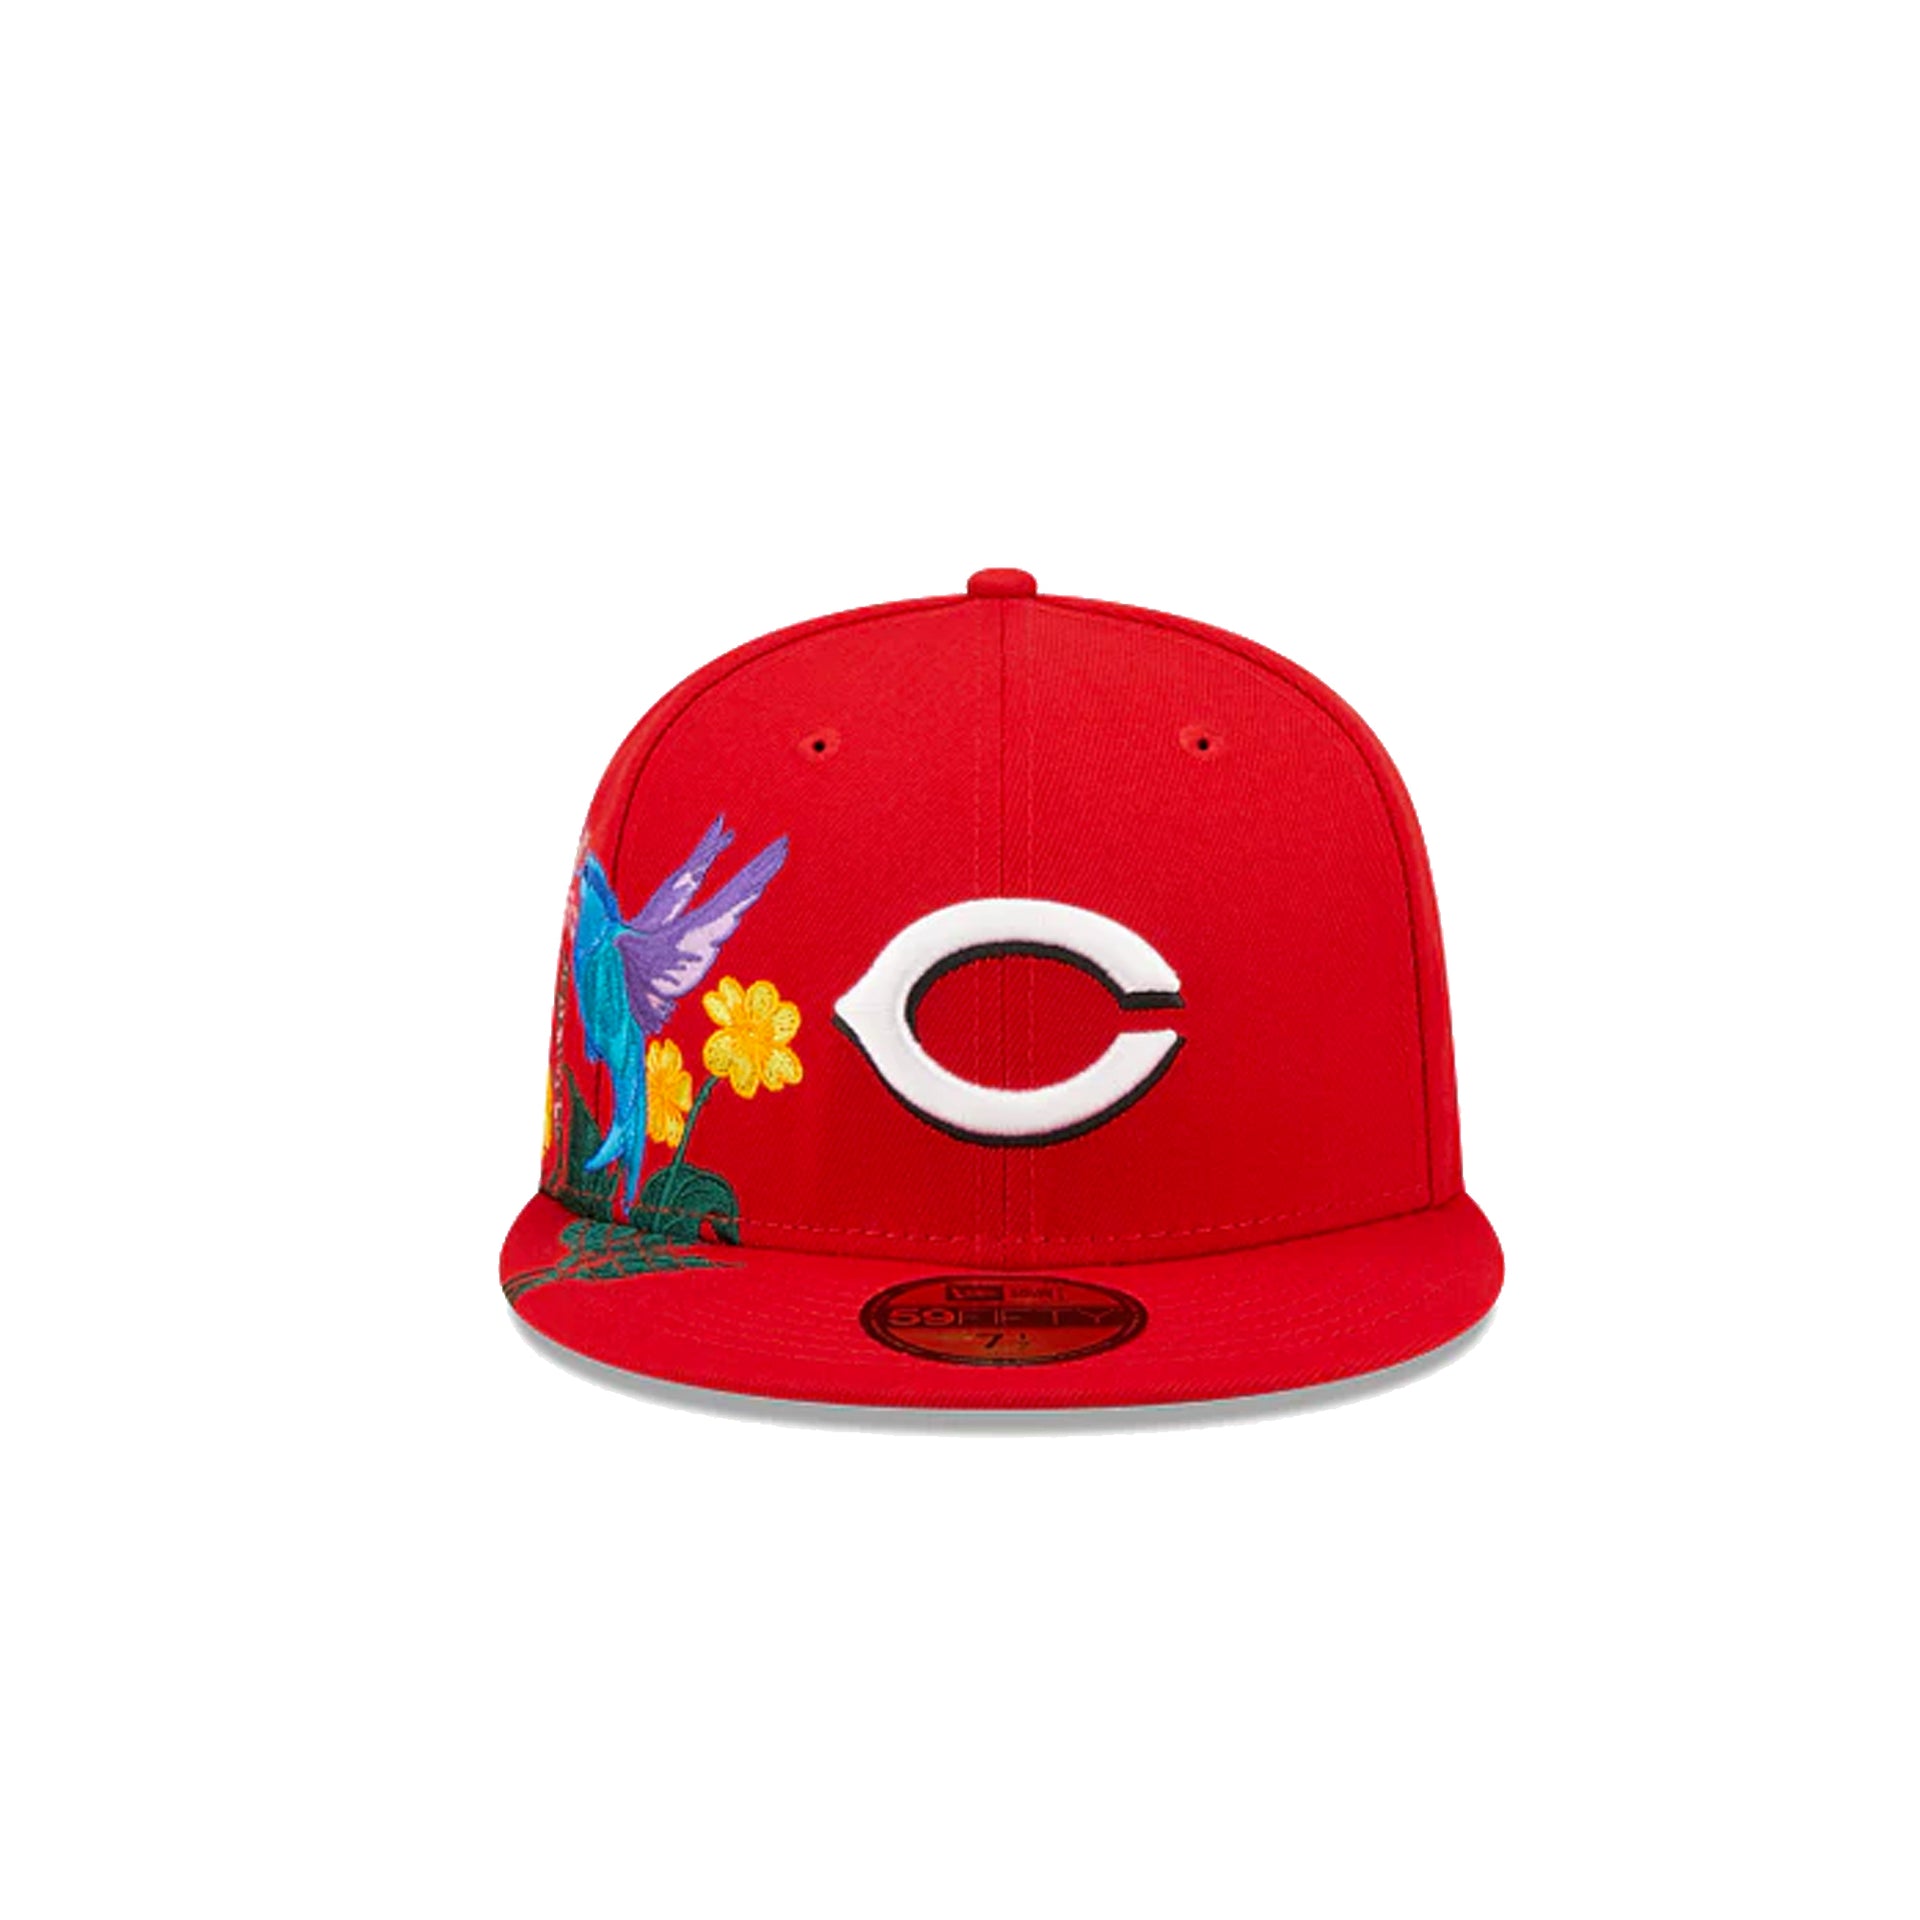 Cincinnati Reds New Era Retro 59FIFTY Fitted Hat - Stone/Red